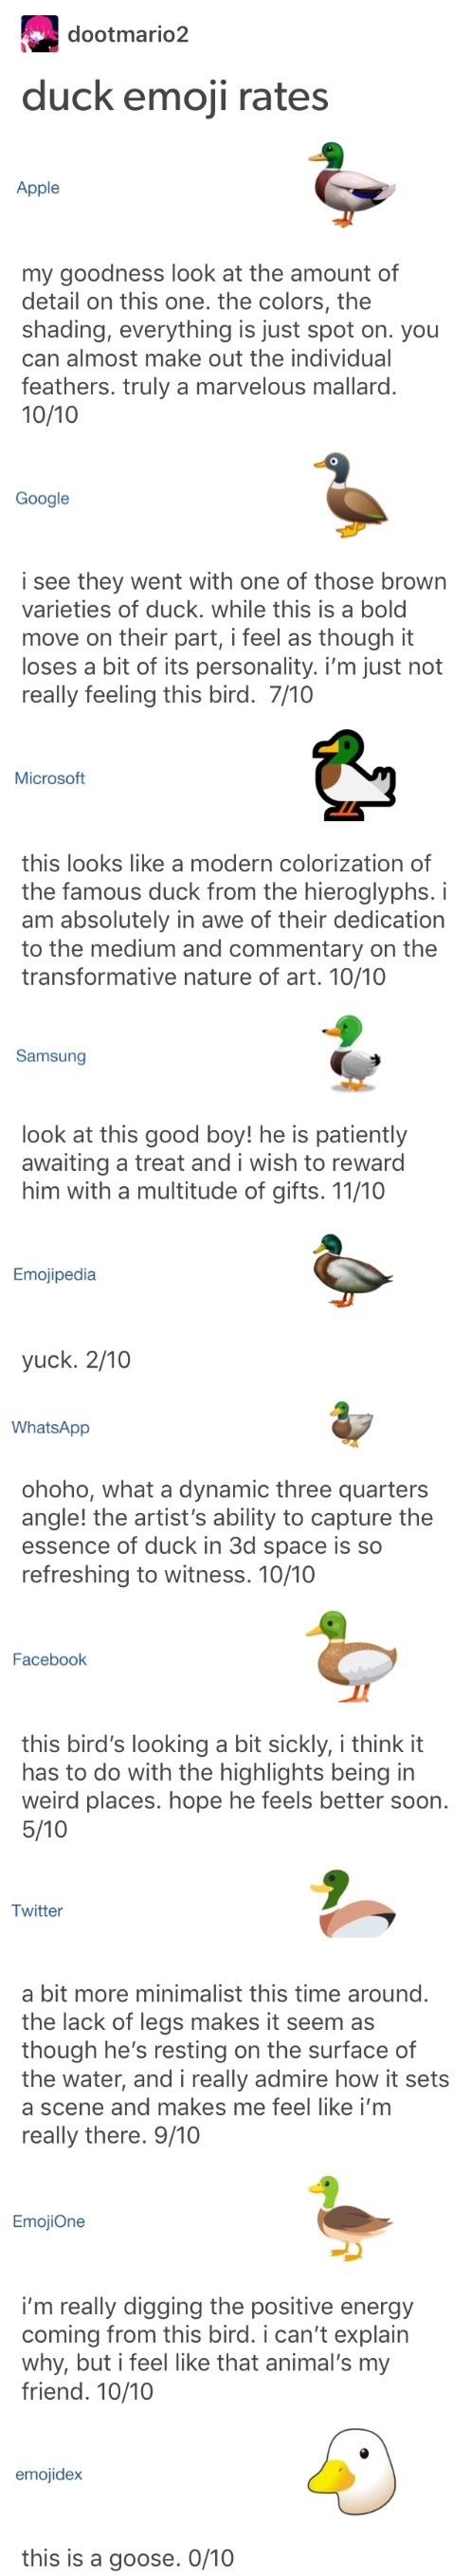 The internet of ducks.